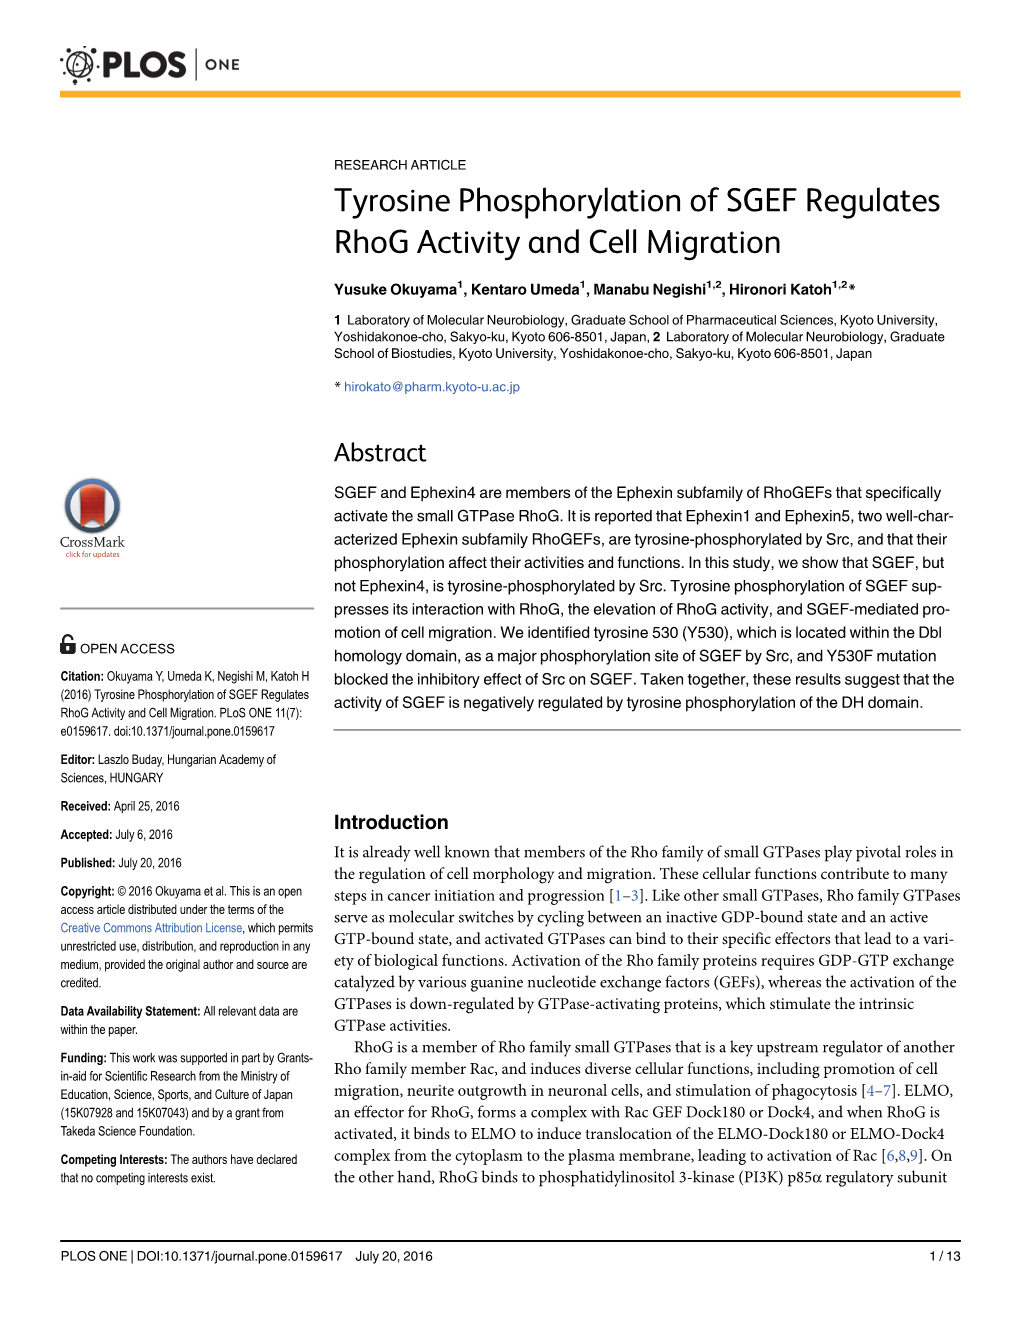 Tyrosine Phosphorylation of SGEF Regulates Rhog Activity and Cell Migration